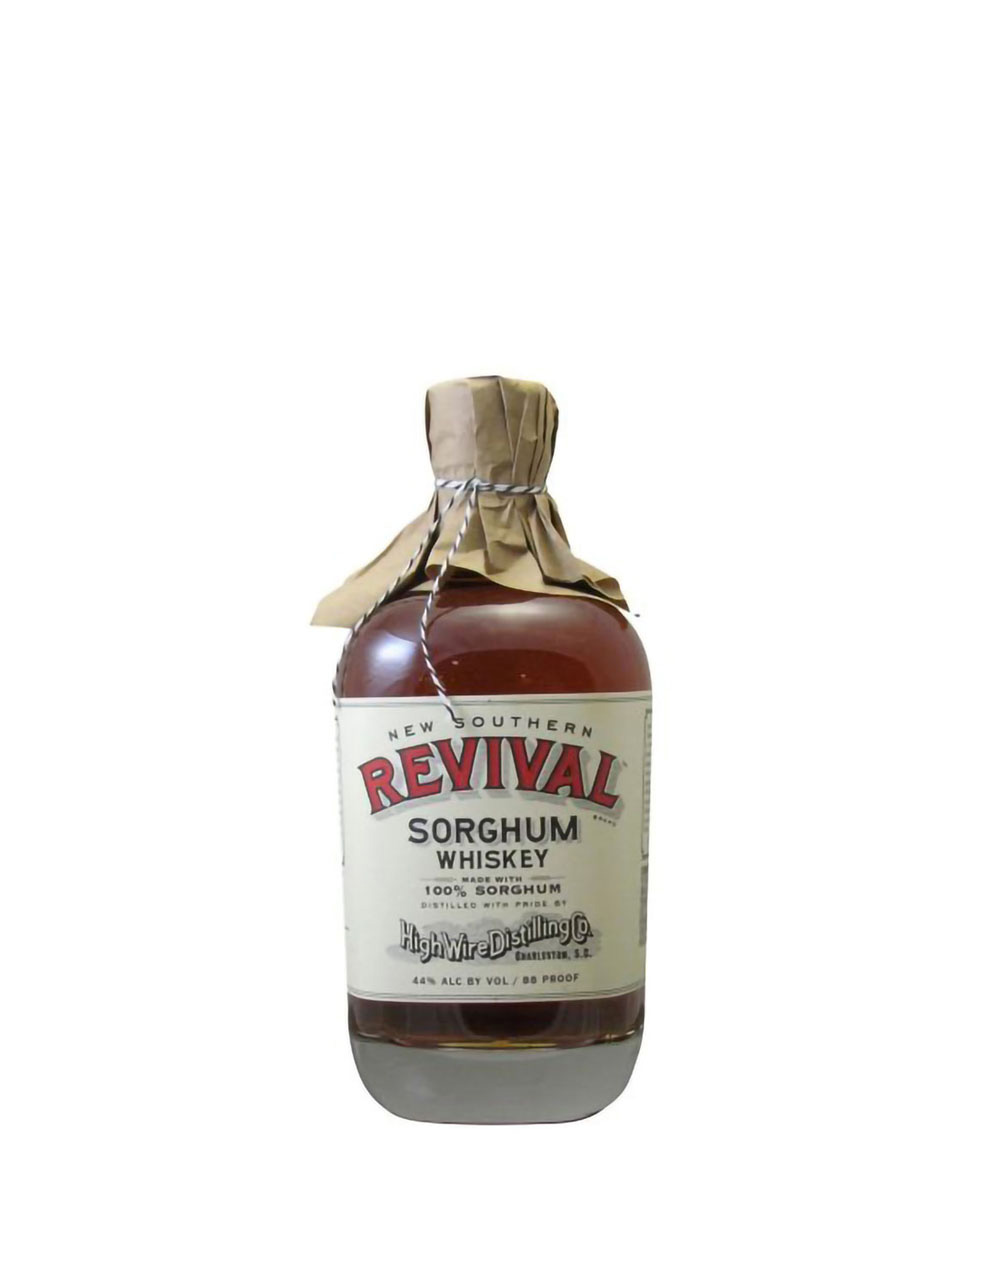 New Southern Revival Sorghum Whiskey